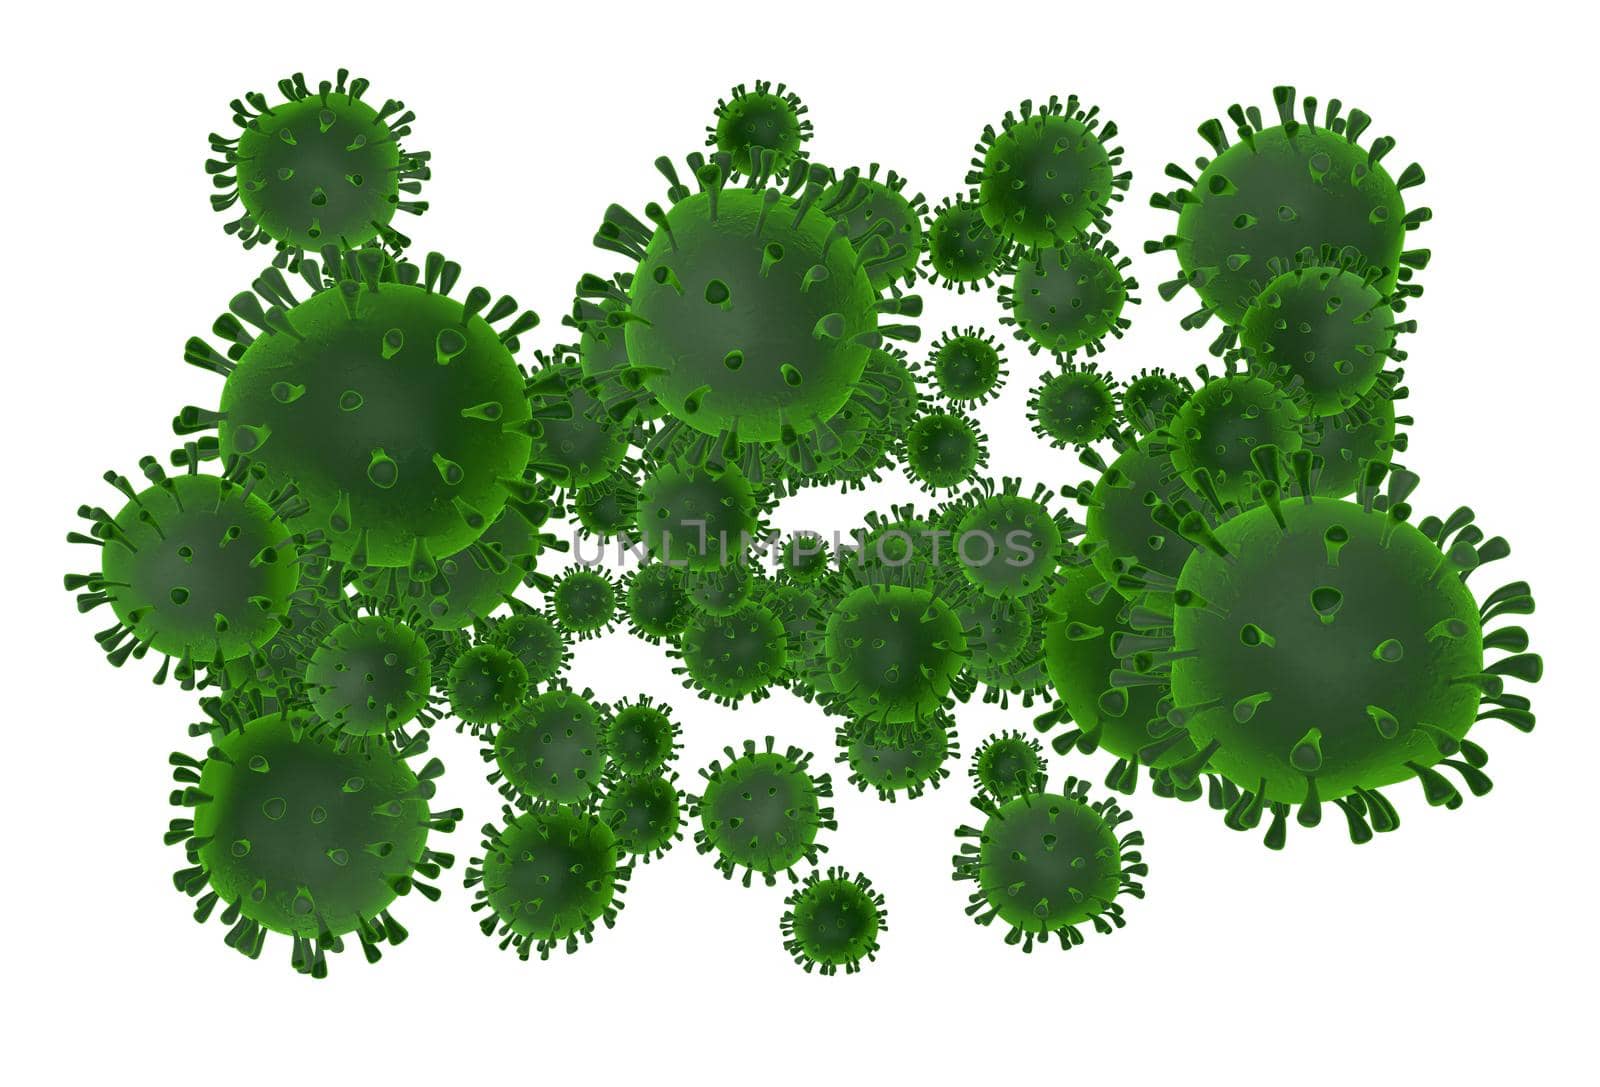 Cluster of dangerous viruses by Mibuch